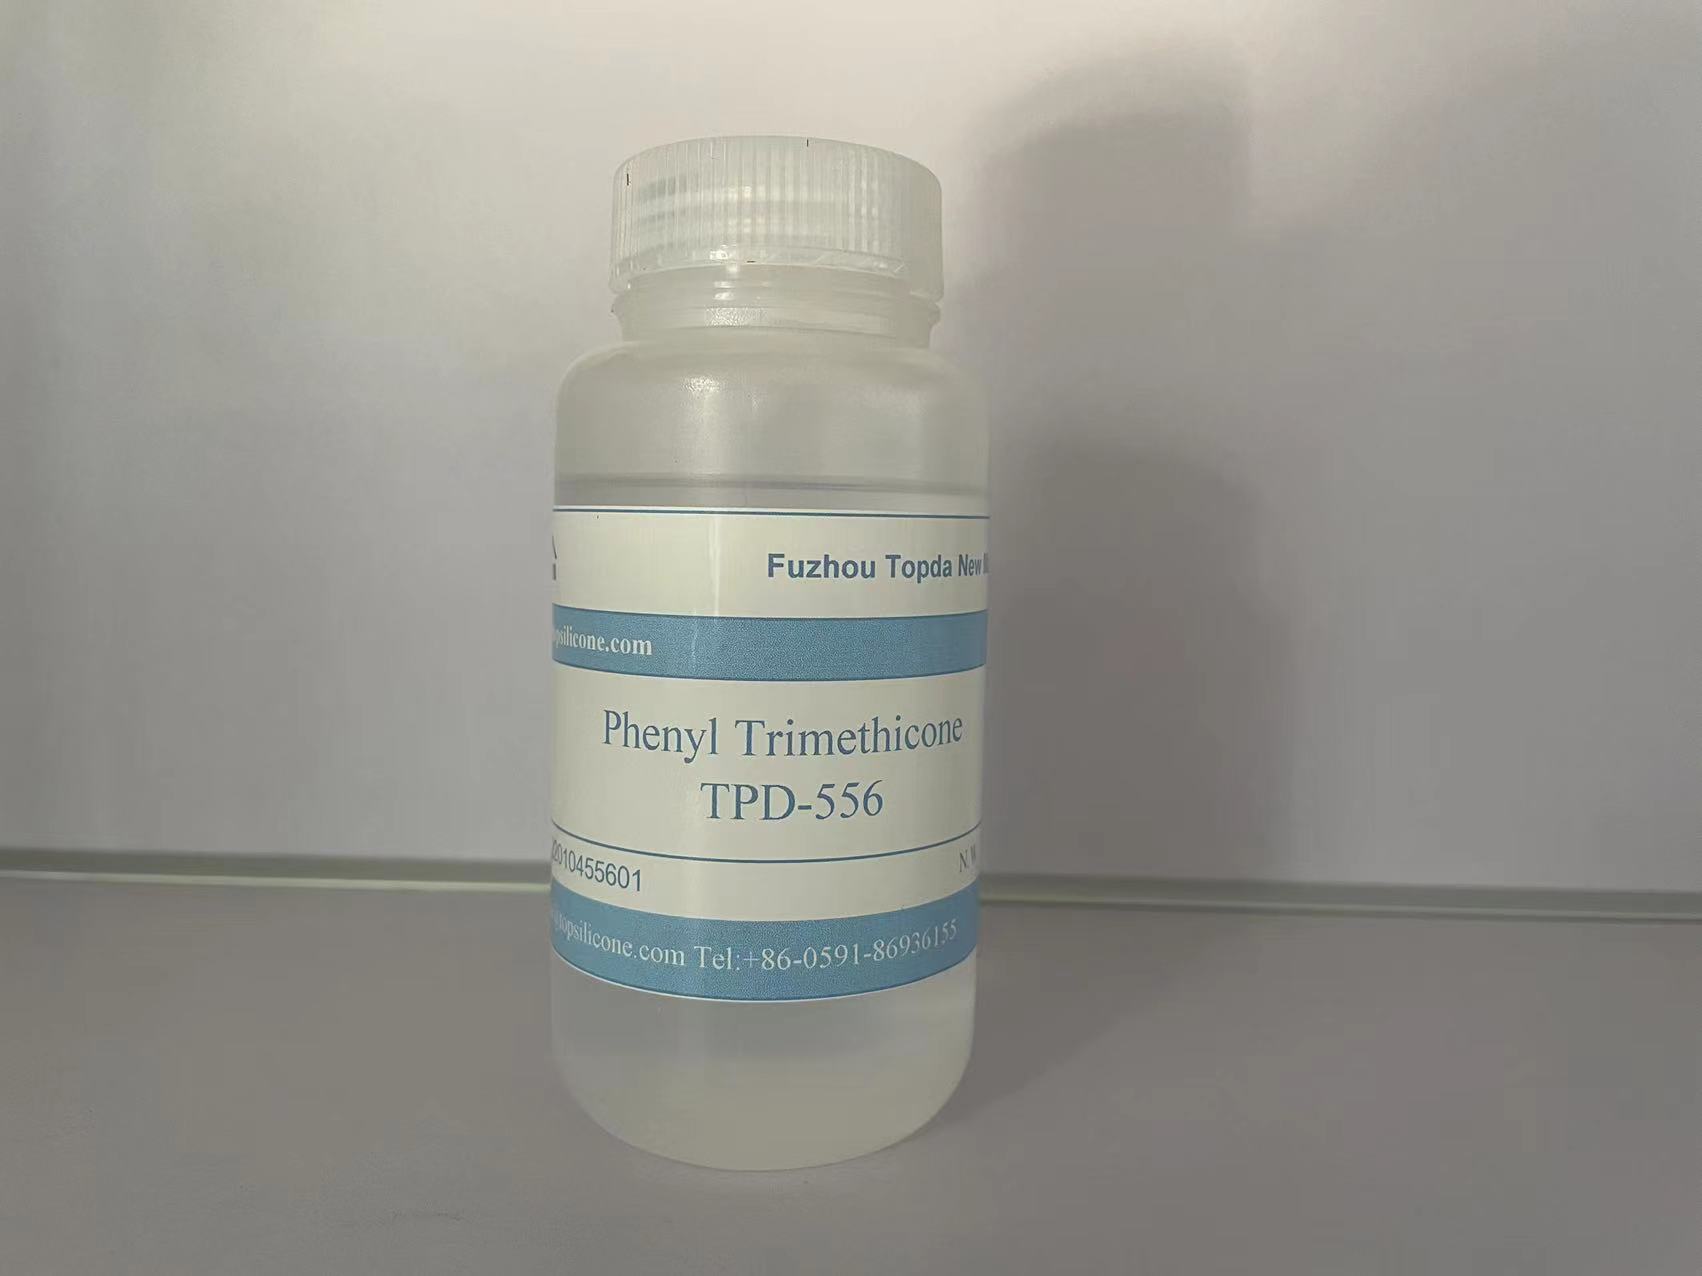 Dimethyl Silicone Oil 100cSt TPD-201-100